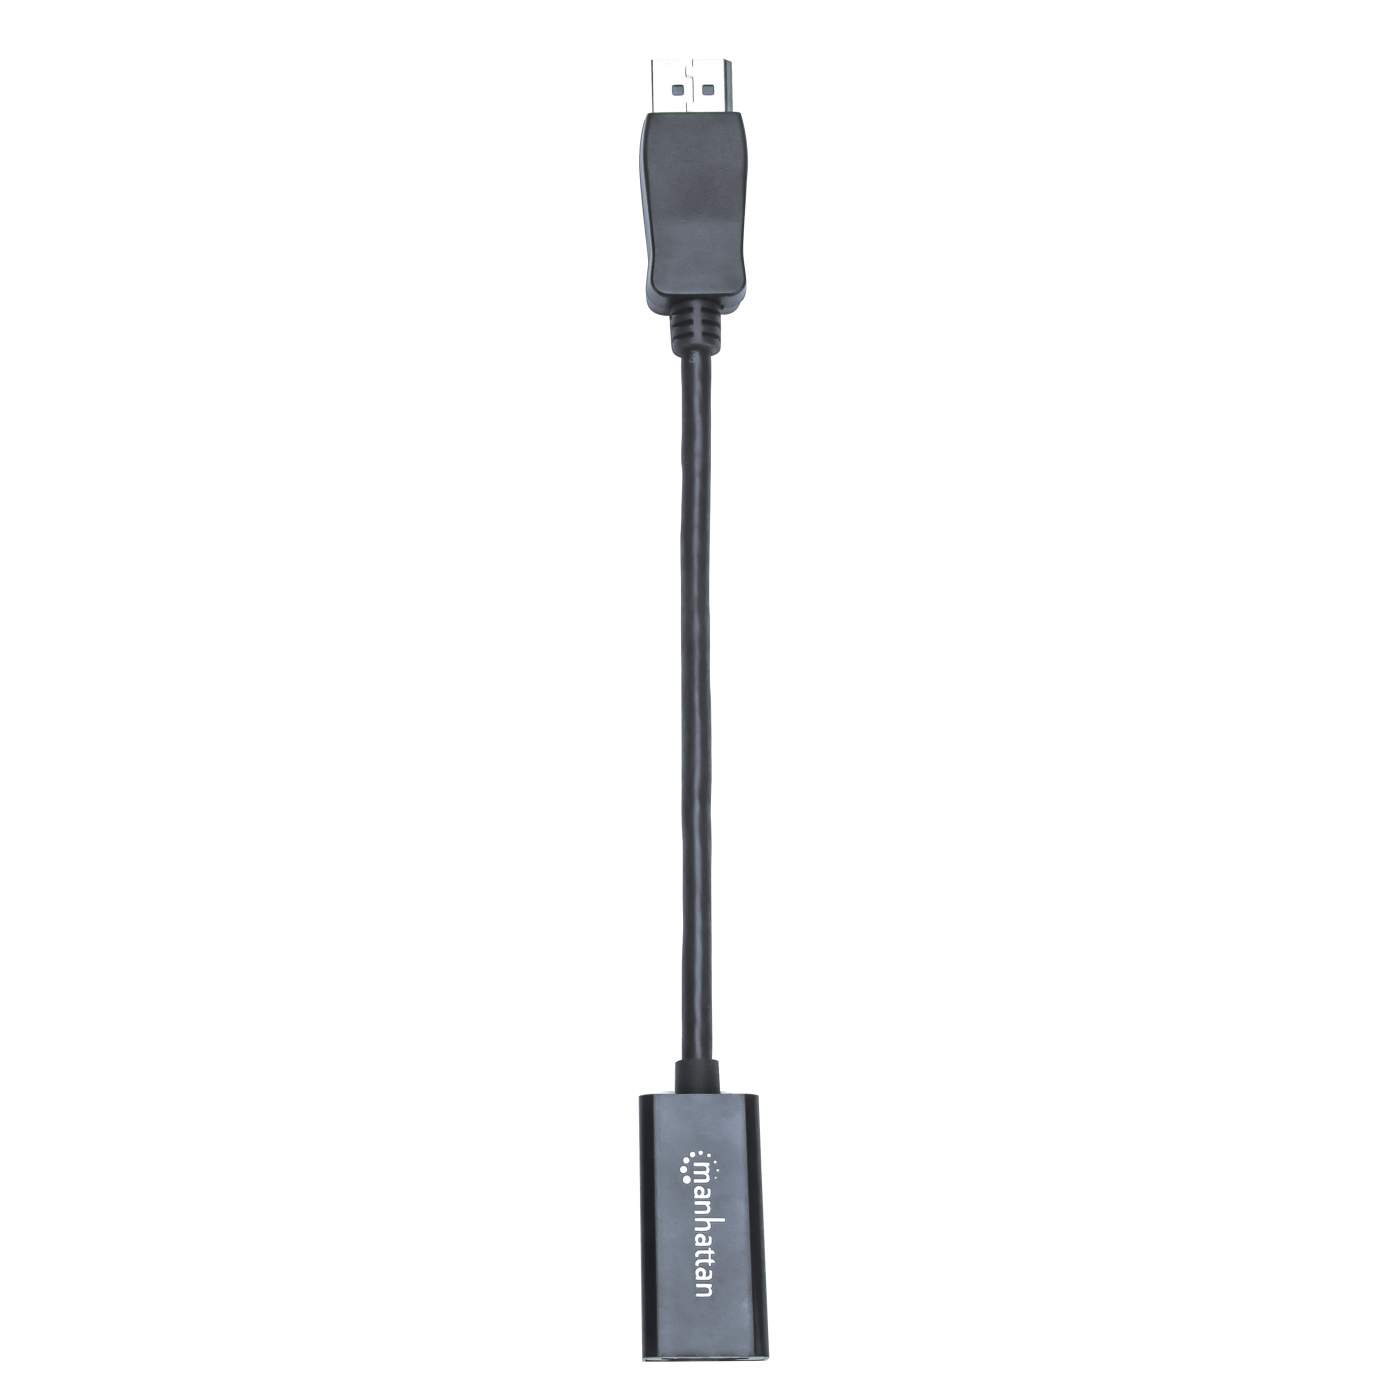 Cable Matters Mini HDMI to HDMI Adapter (HDMI to Mini HDMI Adapter)